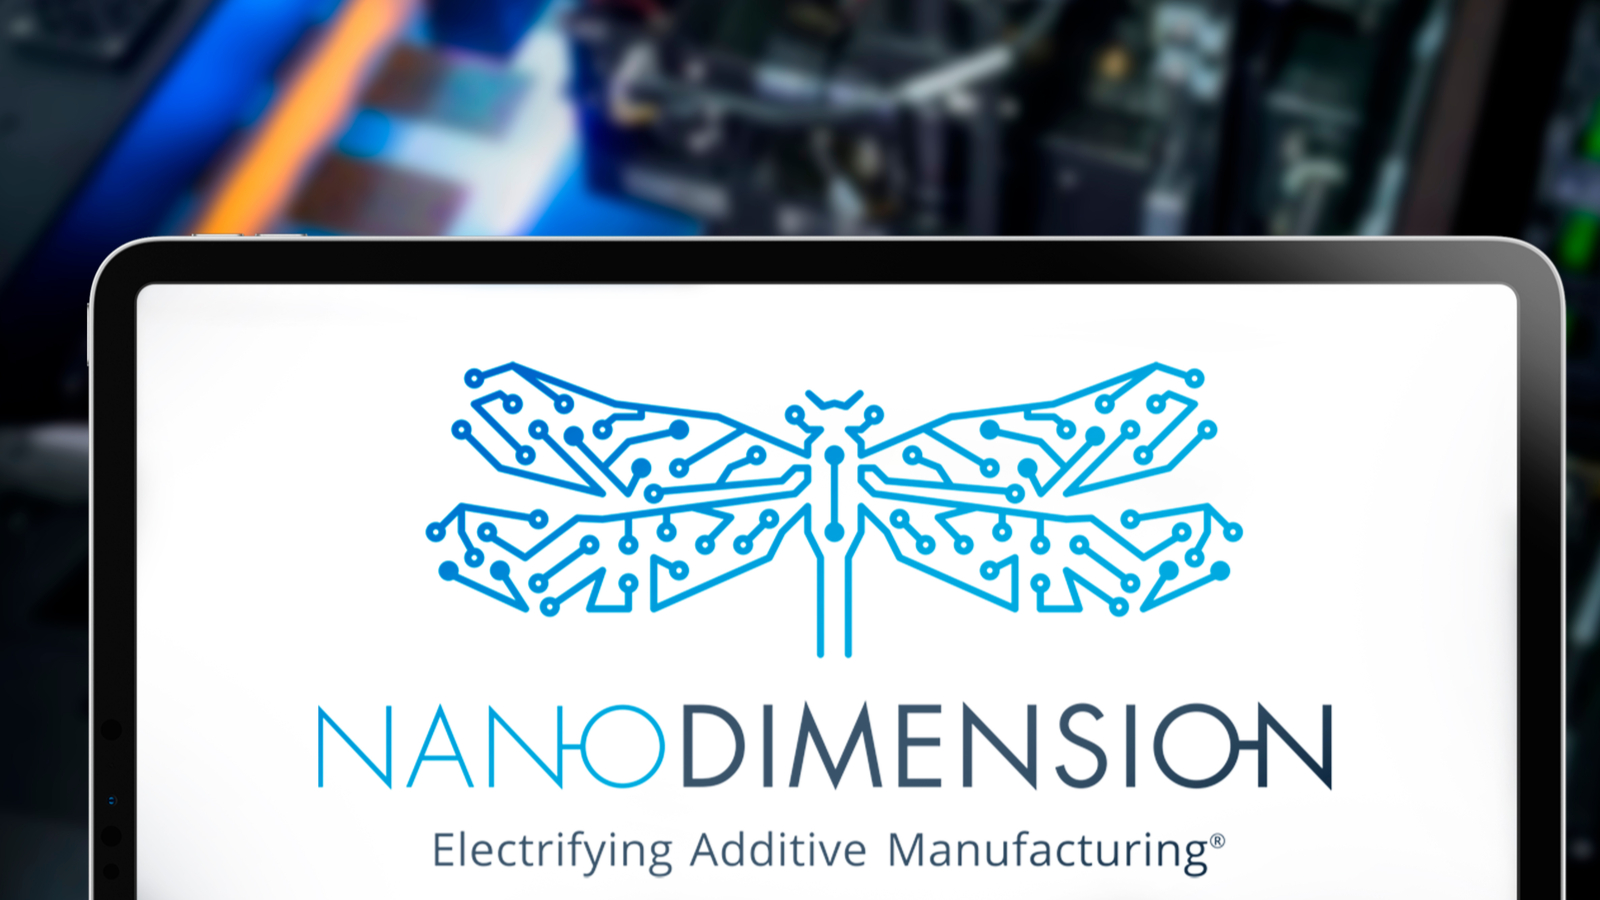 Nano Dimension (NNDM stock) logo in an iPad, on the background their proprietary 3D printer